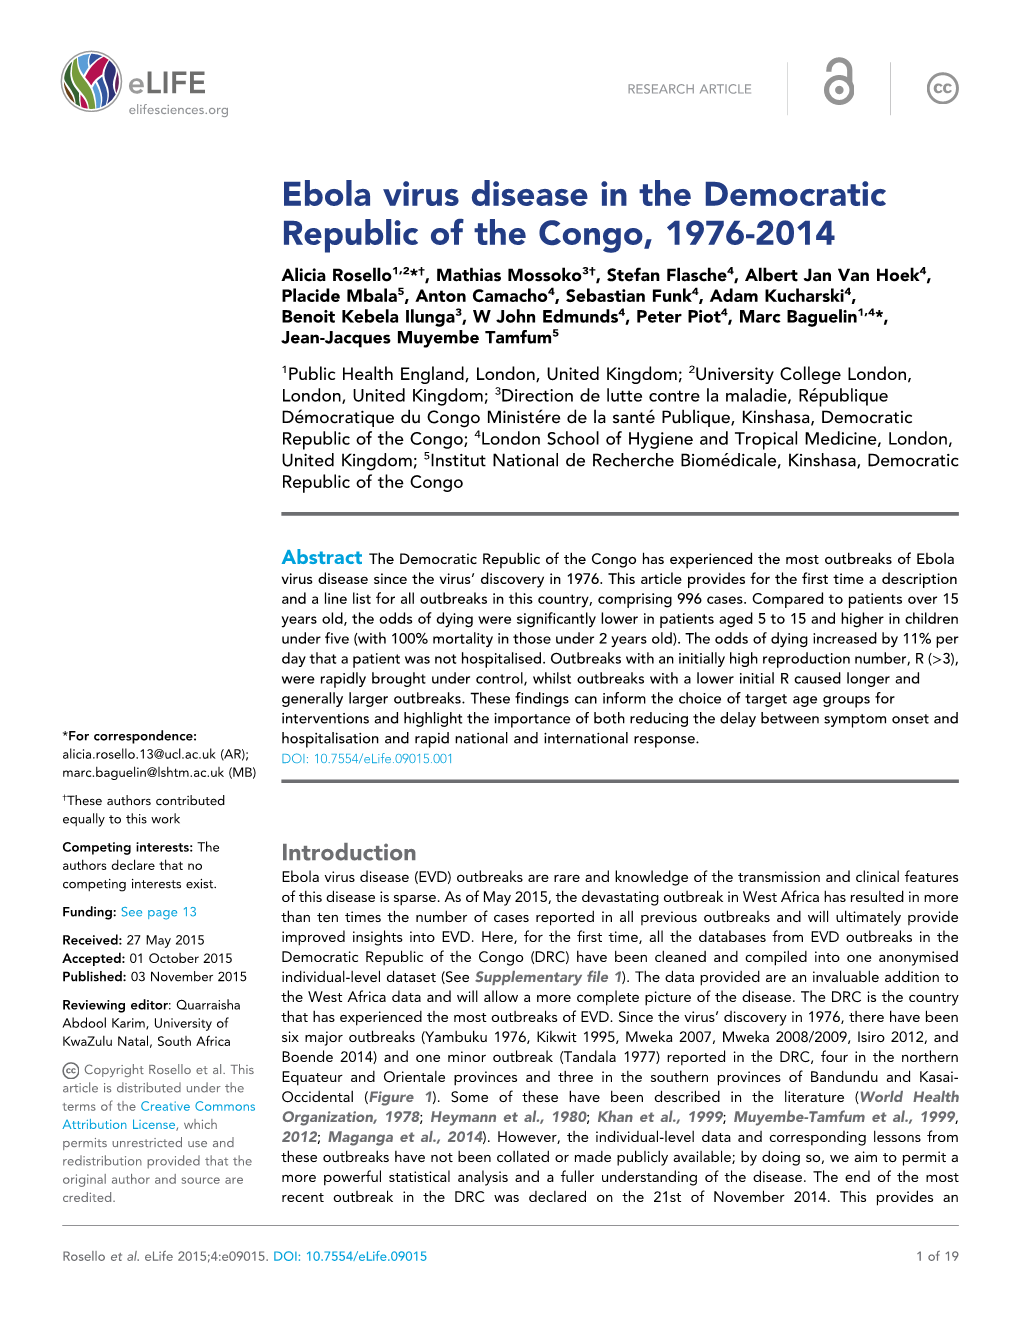 Ebola Virus Disease in the Democratic Republic of the Congo, 1976-2014